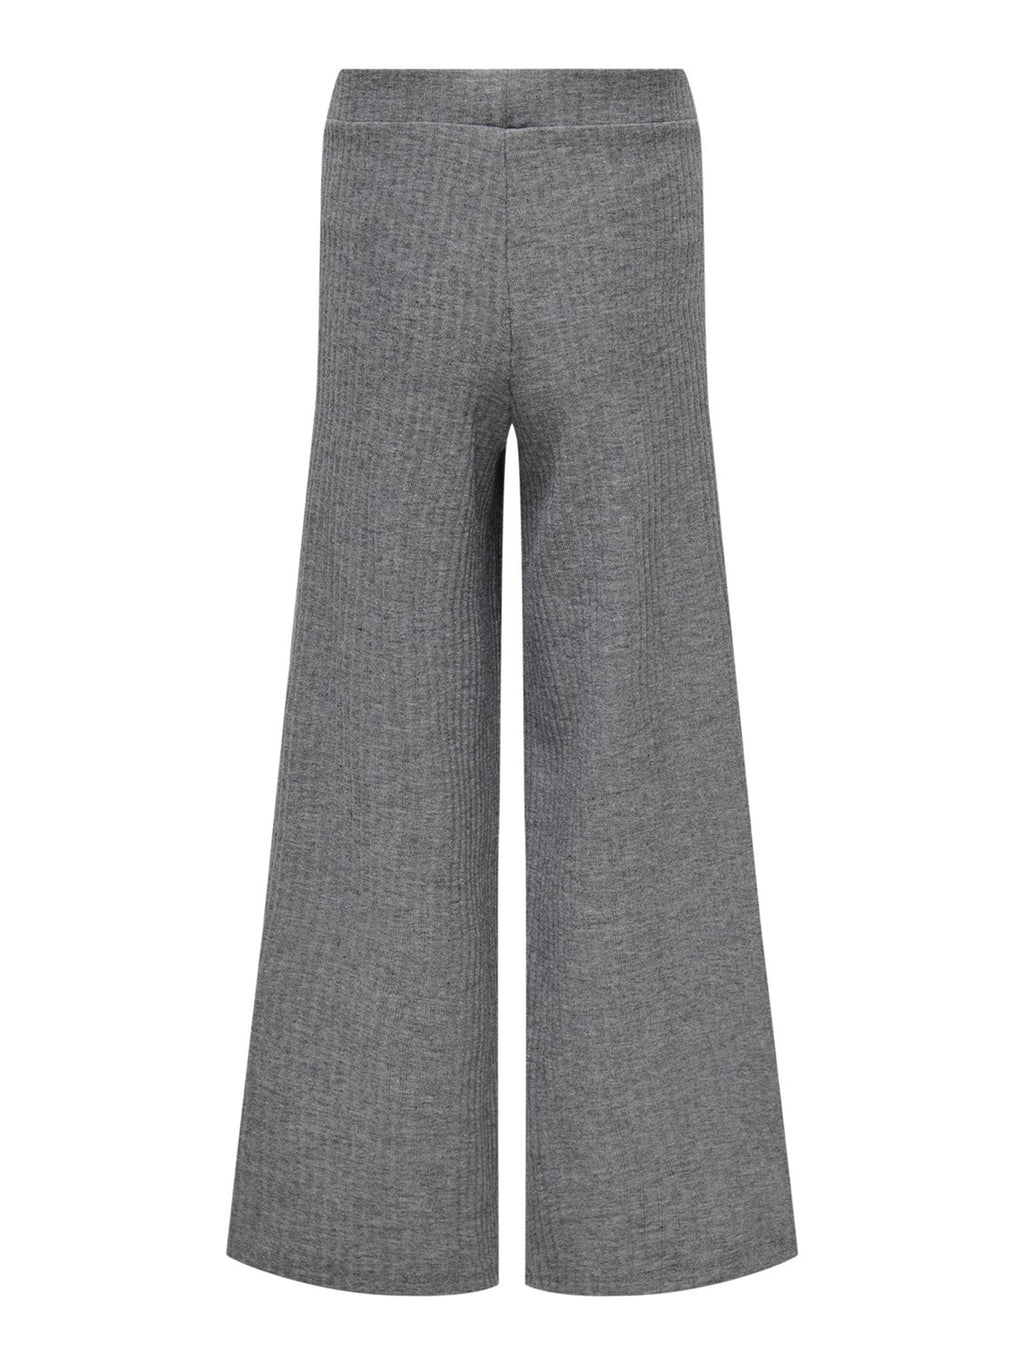 Nella Trousers - Medium Grey Melange